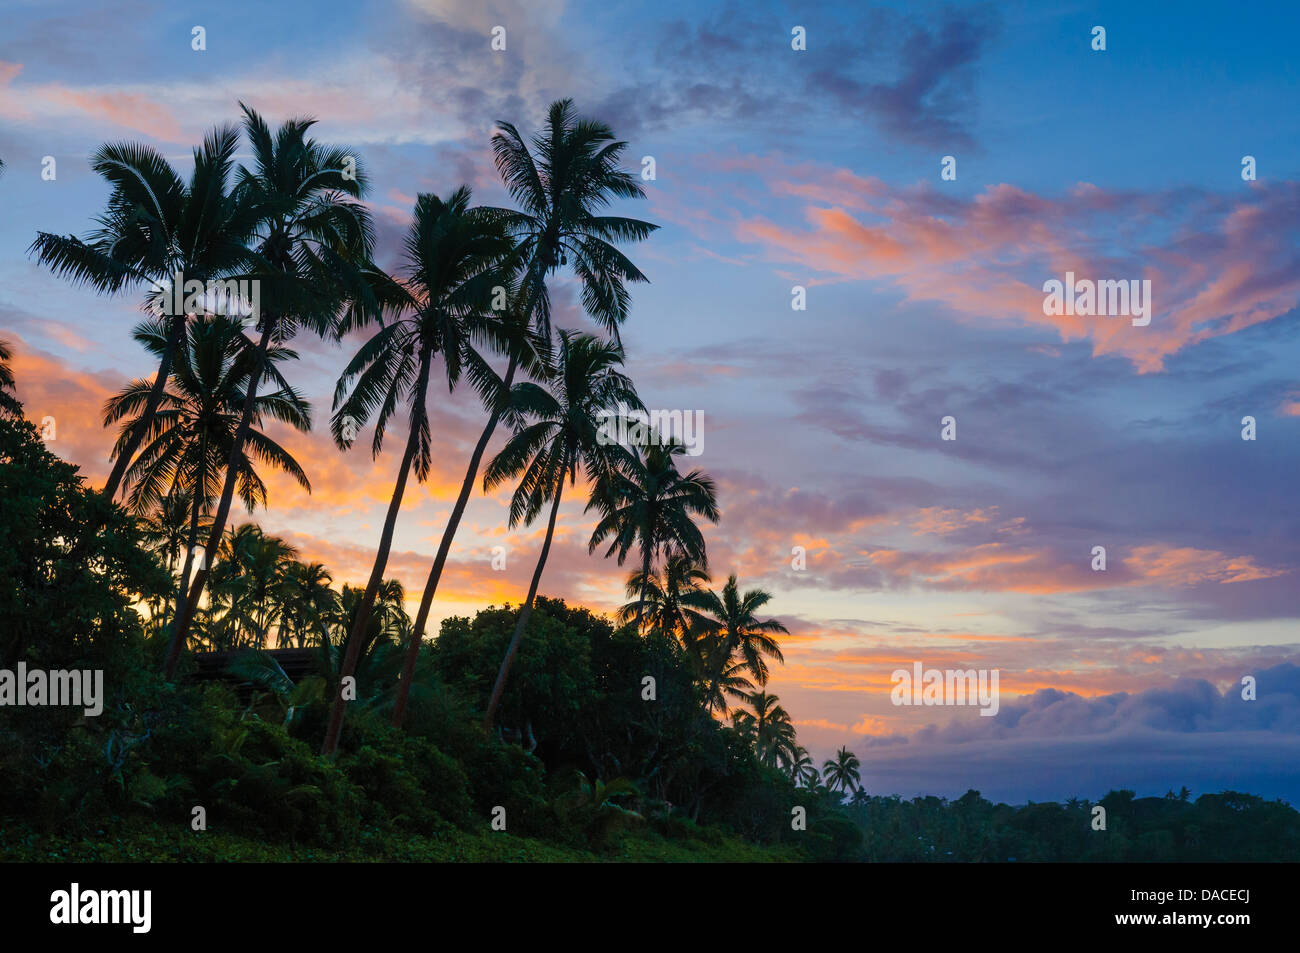 Coconut palm trees and sunrise sky at the Shangri-La Fijian Resort, Coral Coast, Fiji Stock Photo